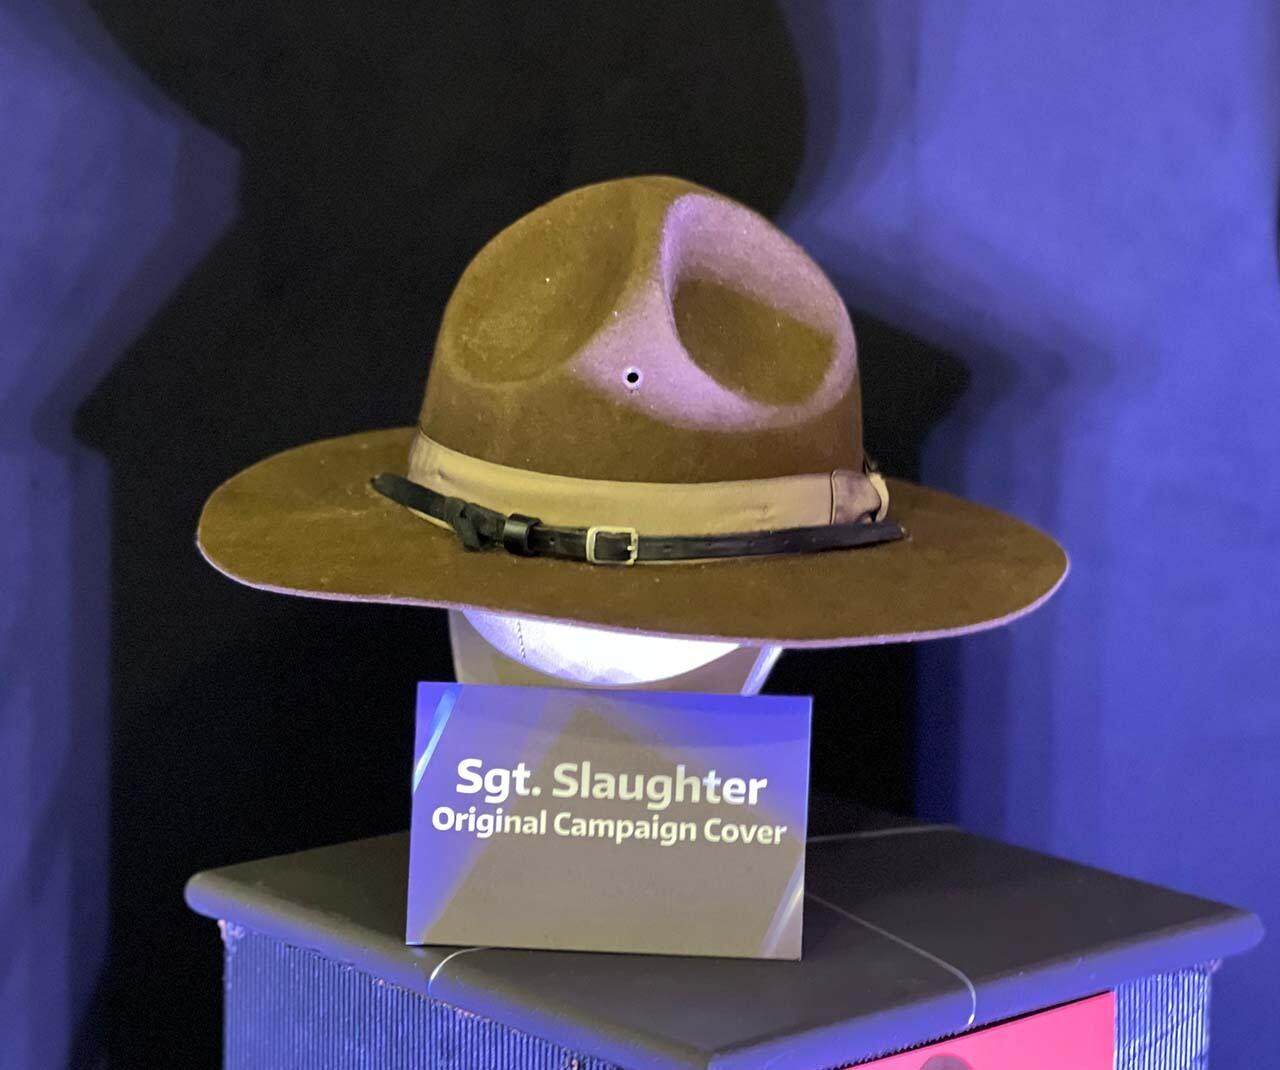 Sgt. Slaughter's hat